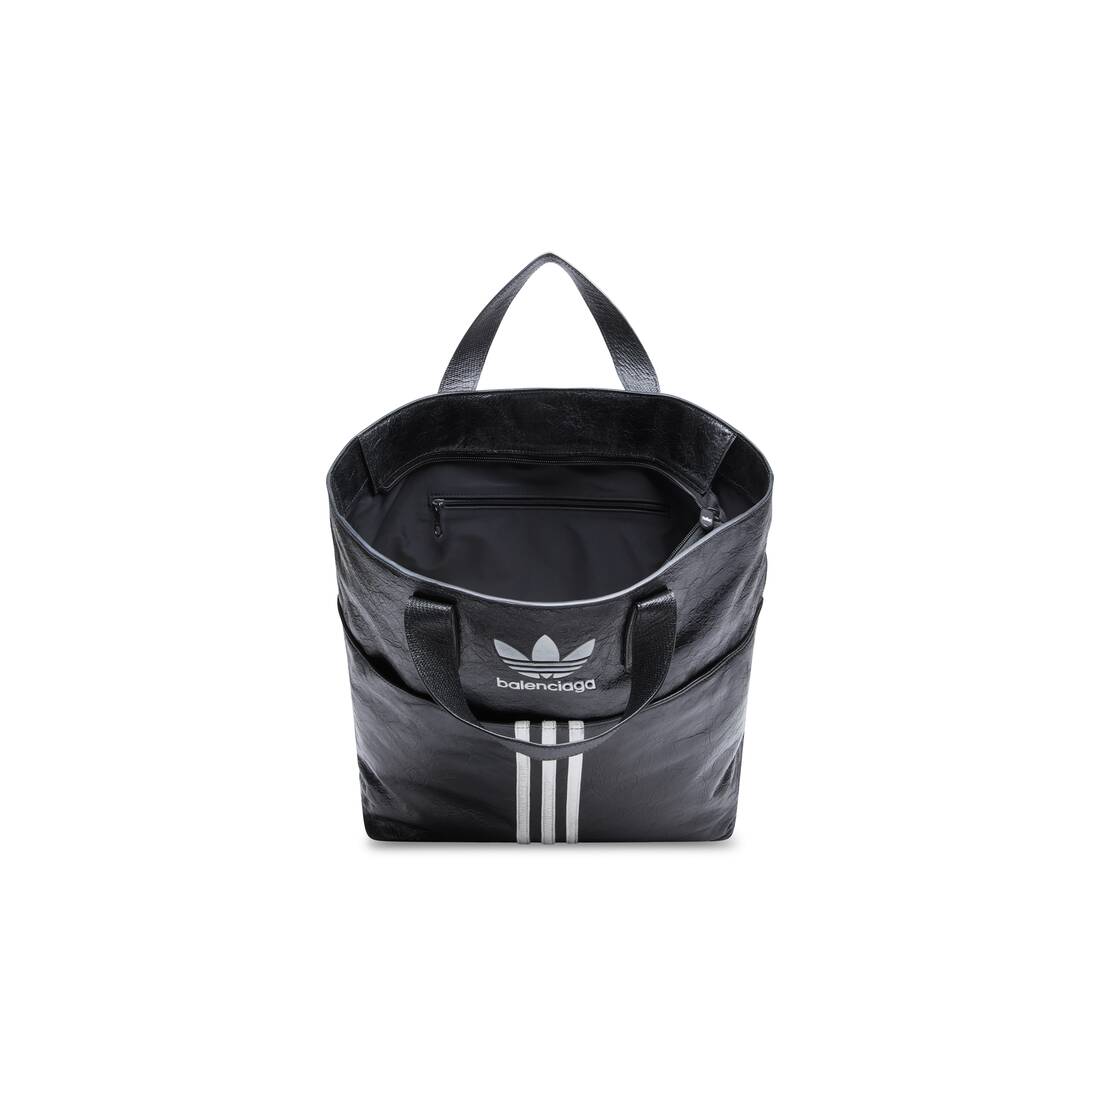 Balenciaga / Adidas North-south トートバッグ のために メンズ で ブラック